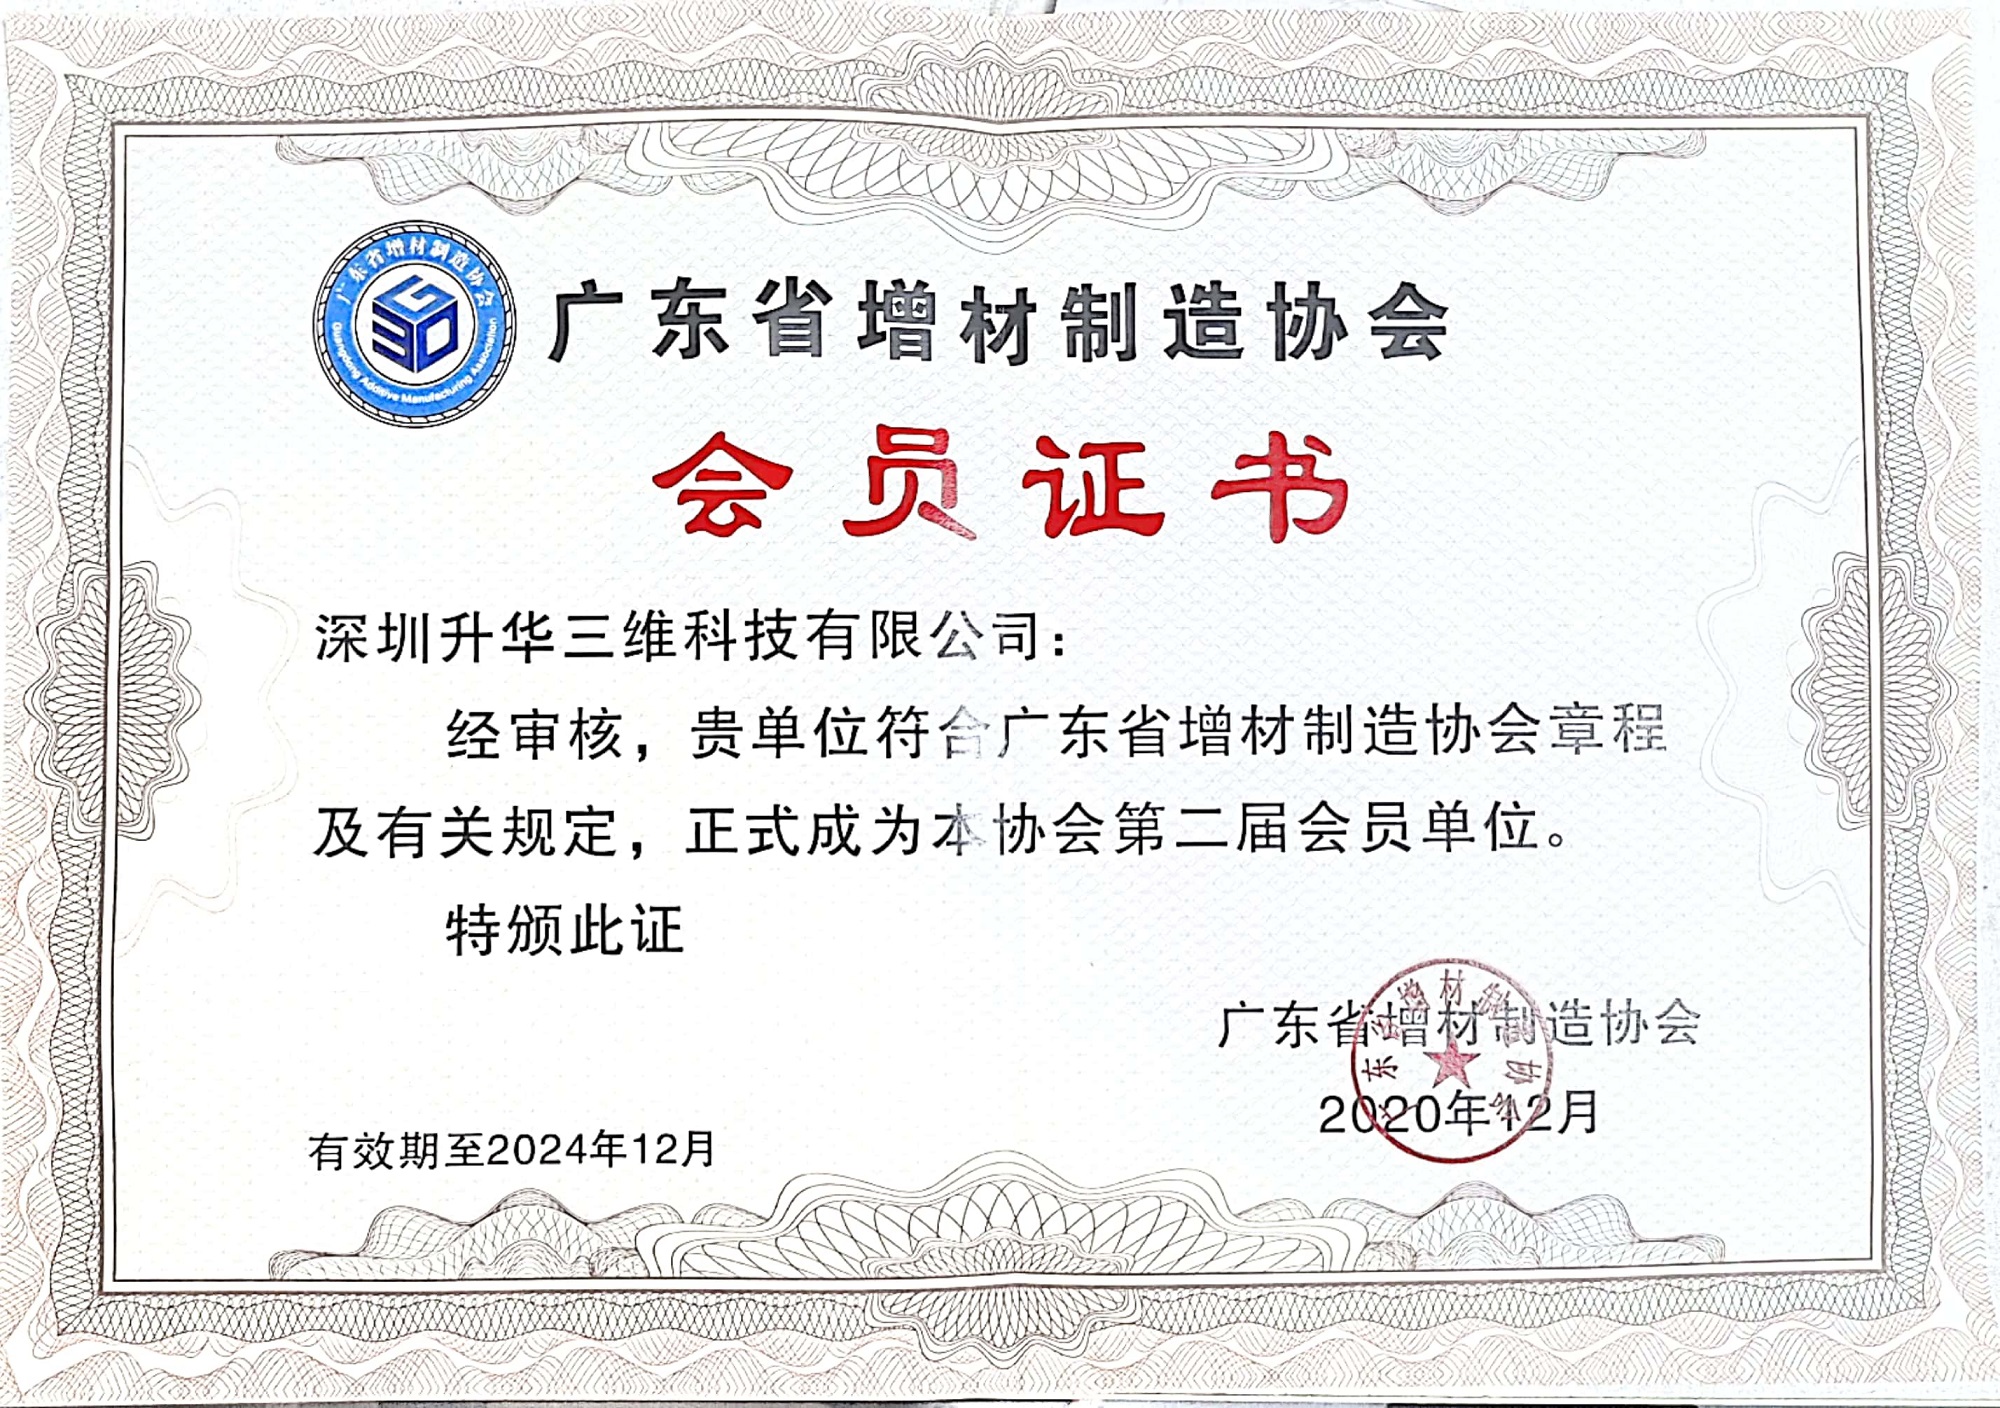 Membership Certificate of Guangdong Additive Manufacturing Association